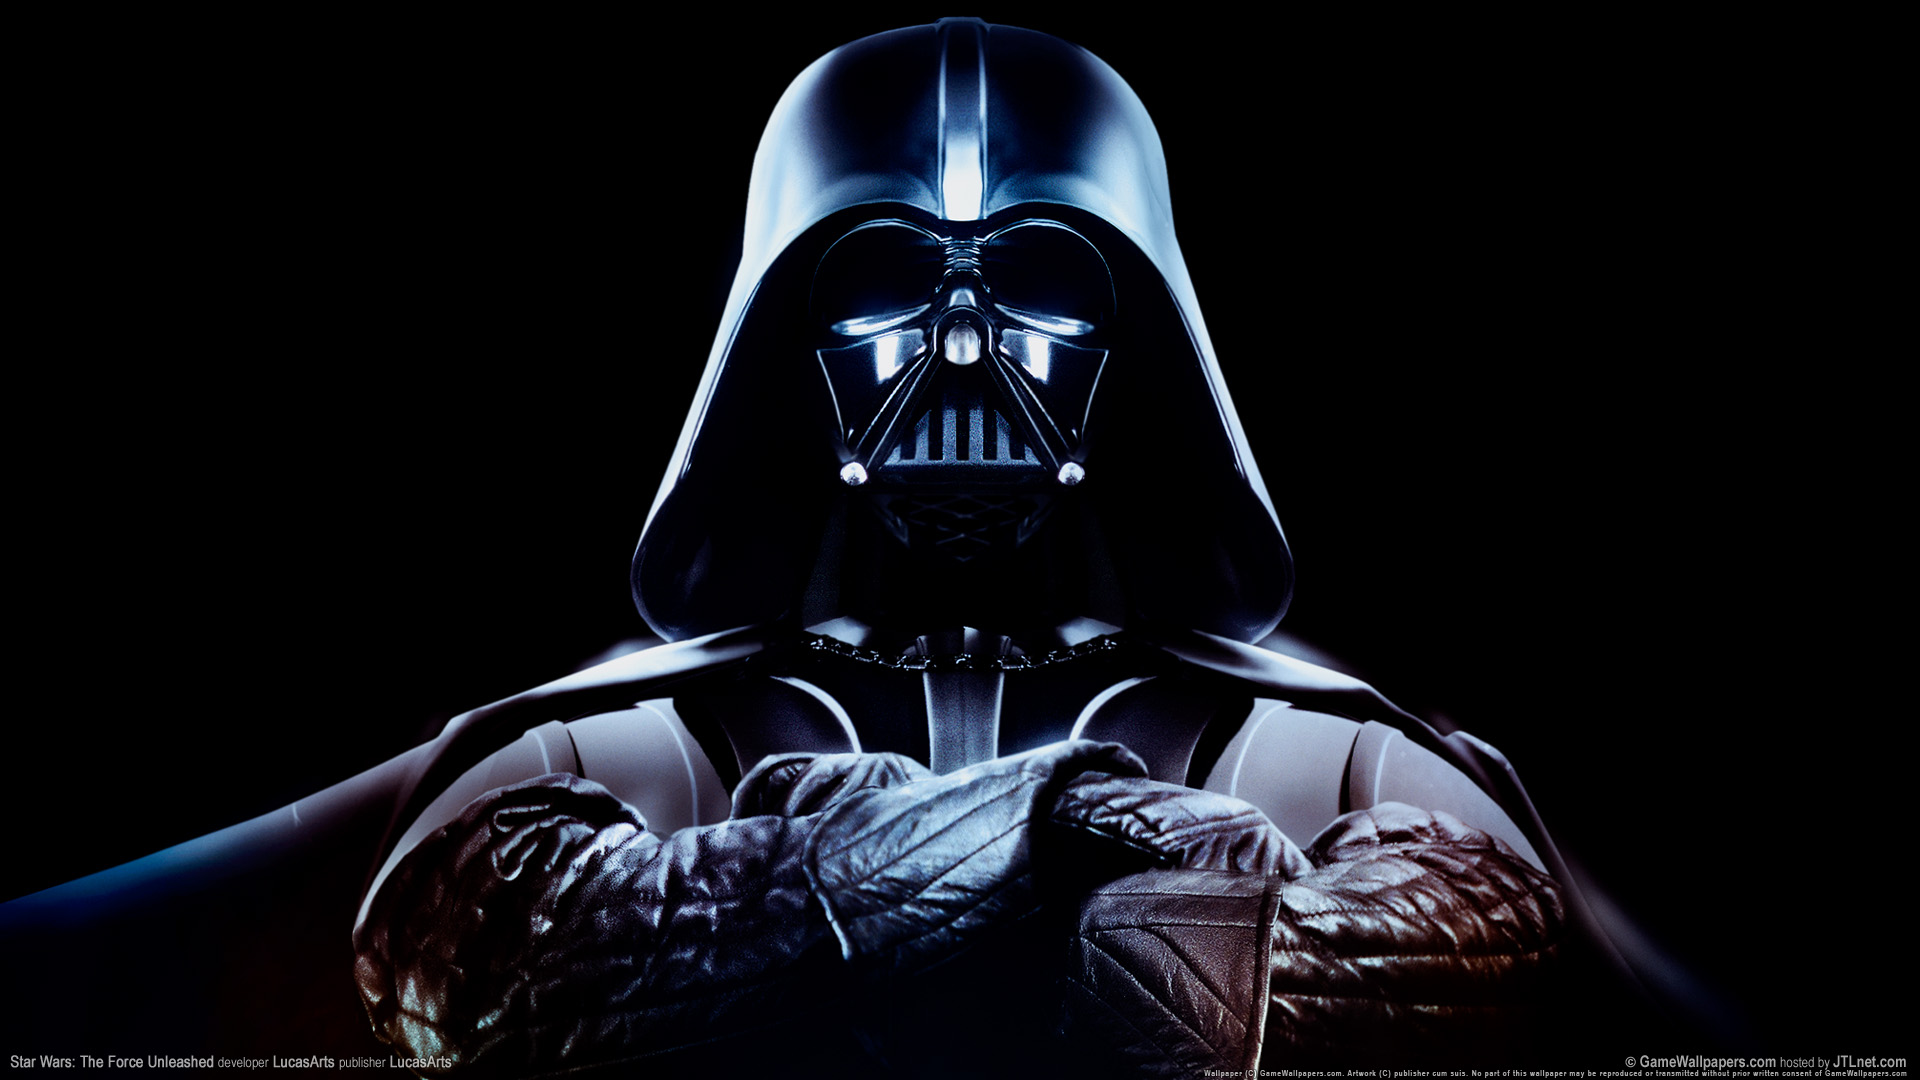 Classical-Wallpaper-Darth-Vader-star-wars-25852934-1920-1080.jpg